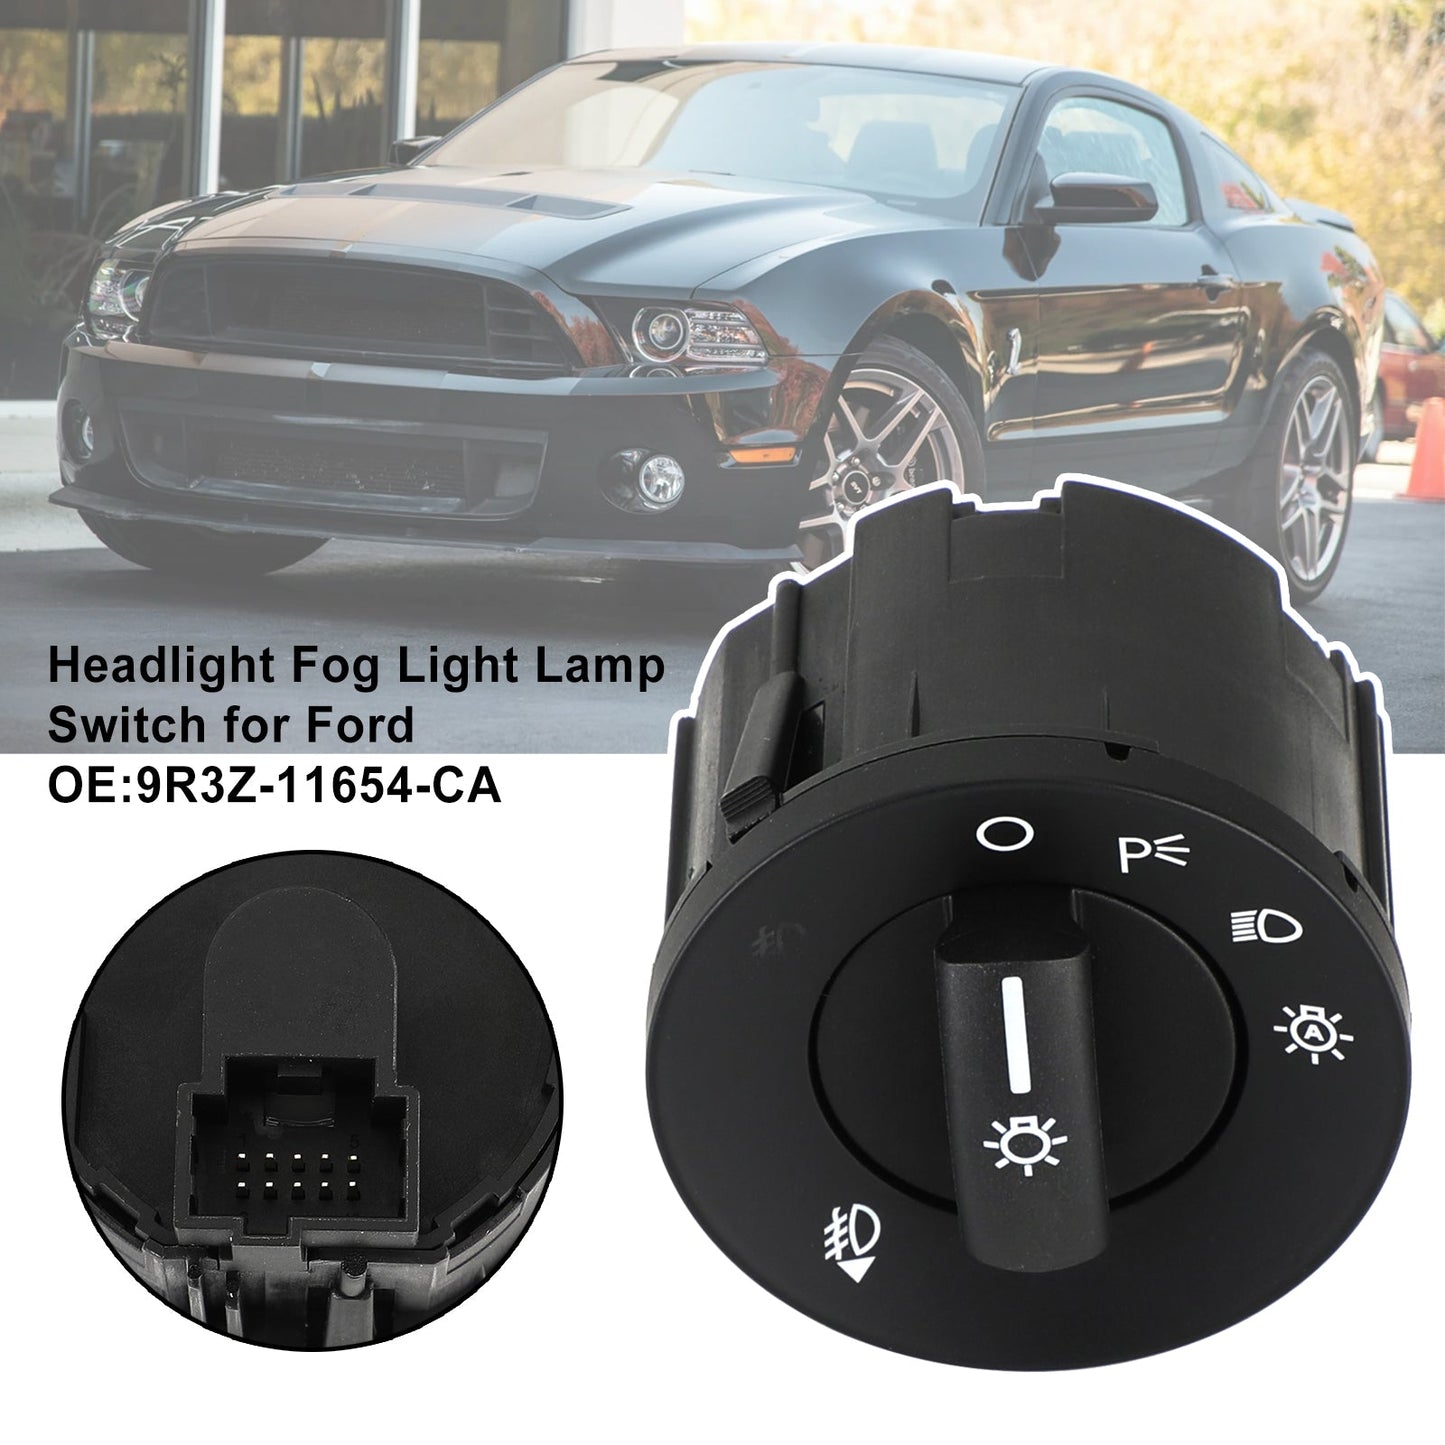 Headlight Fog Light Lamp Switch for Ford Flex Fusion Mustang MKZ 9R3Z-11654-CA